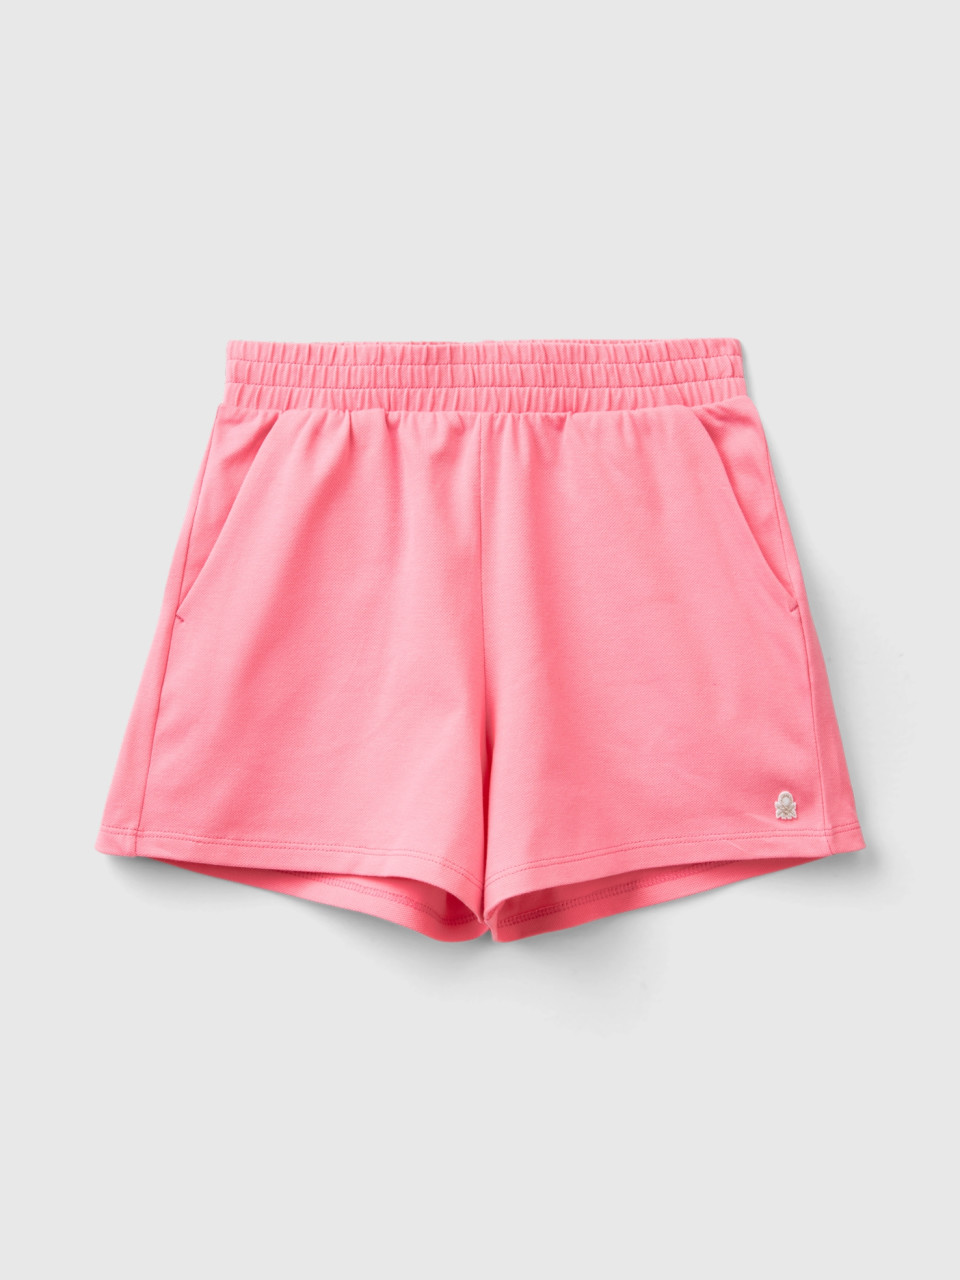 Benetton, Stretch Organic Cotton Shorts, Pink, Kids